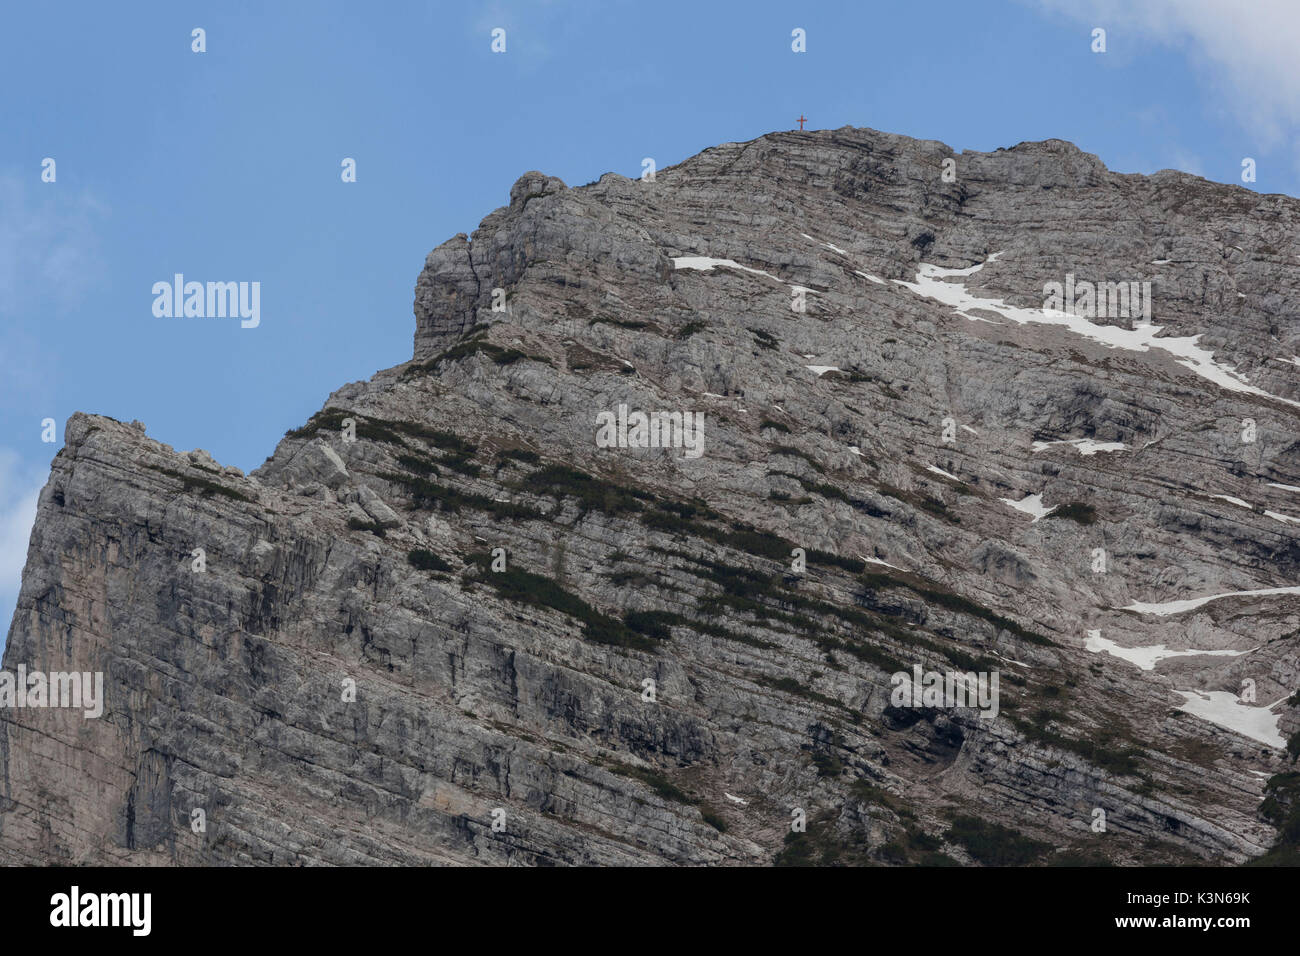 Die nördliche Seite des Piz de Mezodi", auch genannt Cyrano de la Cros (Spitze des Kreuzes) Monti del Sole, Belluno Dolomiten Nationalpark Stockfoto